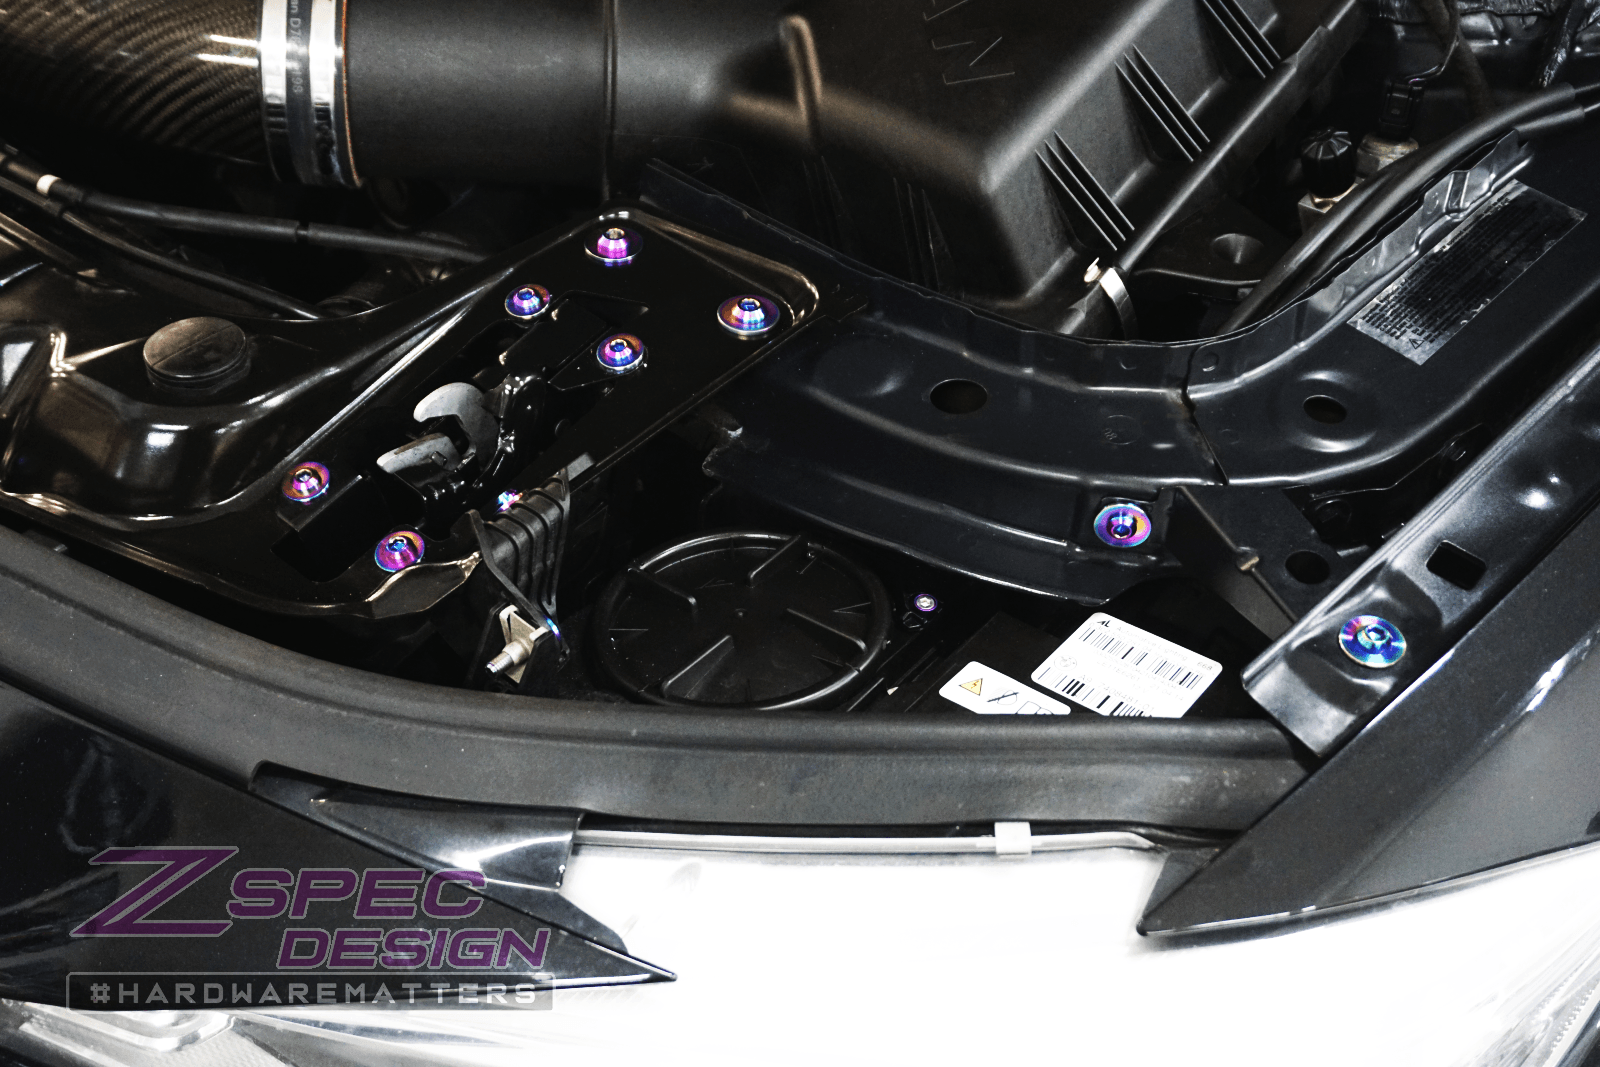 ZSPEC Stage 2 Dress Up Bolts® Fastener Kit for 2014-2019 BMW 435i F32  Grade-5 GR5 Titanium Hardware  Keywords Engine Bay Hardware Upgrade Performance Car Auto Hobby Vehicle Garage